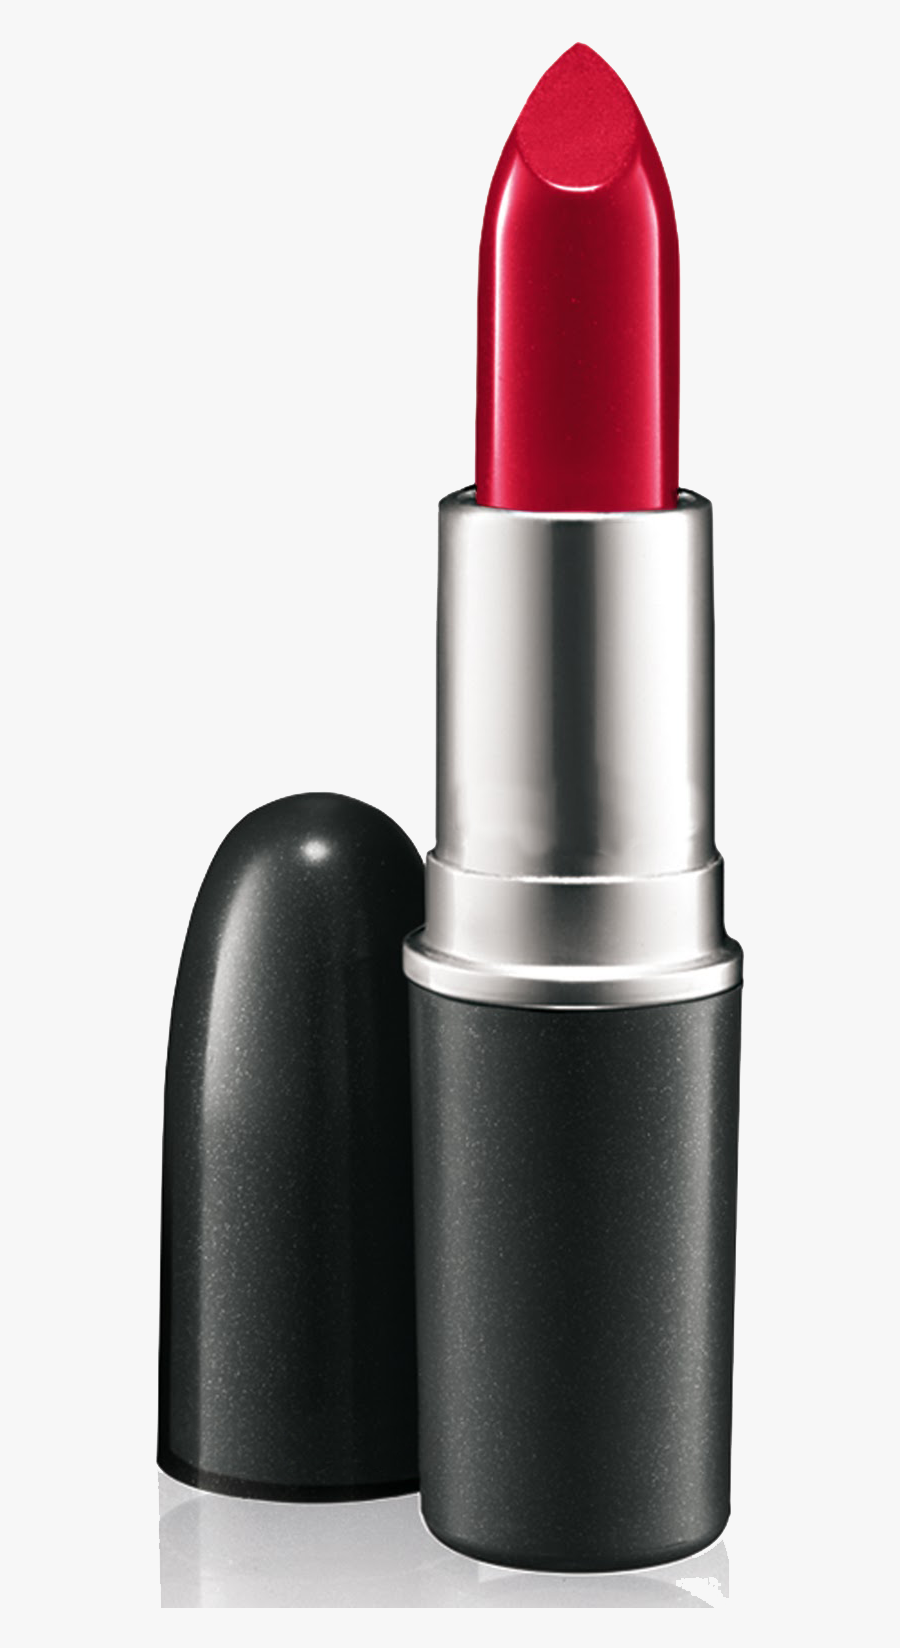 Mac Cosmetics Lipstick Clip - Red Lipstick Transparent Png, Transparent Clipart